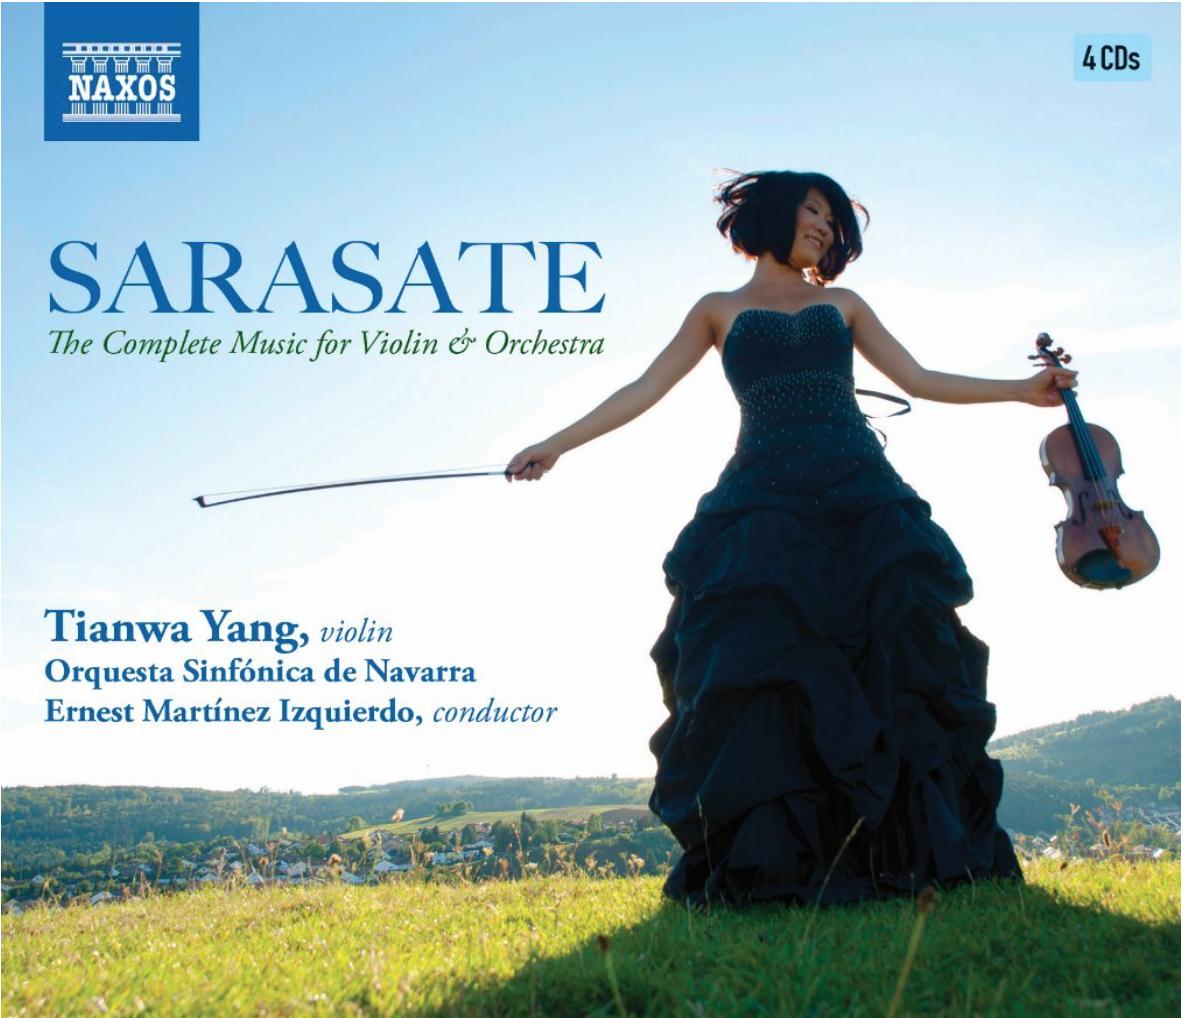 Sarasate complete violin music